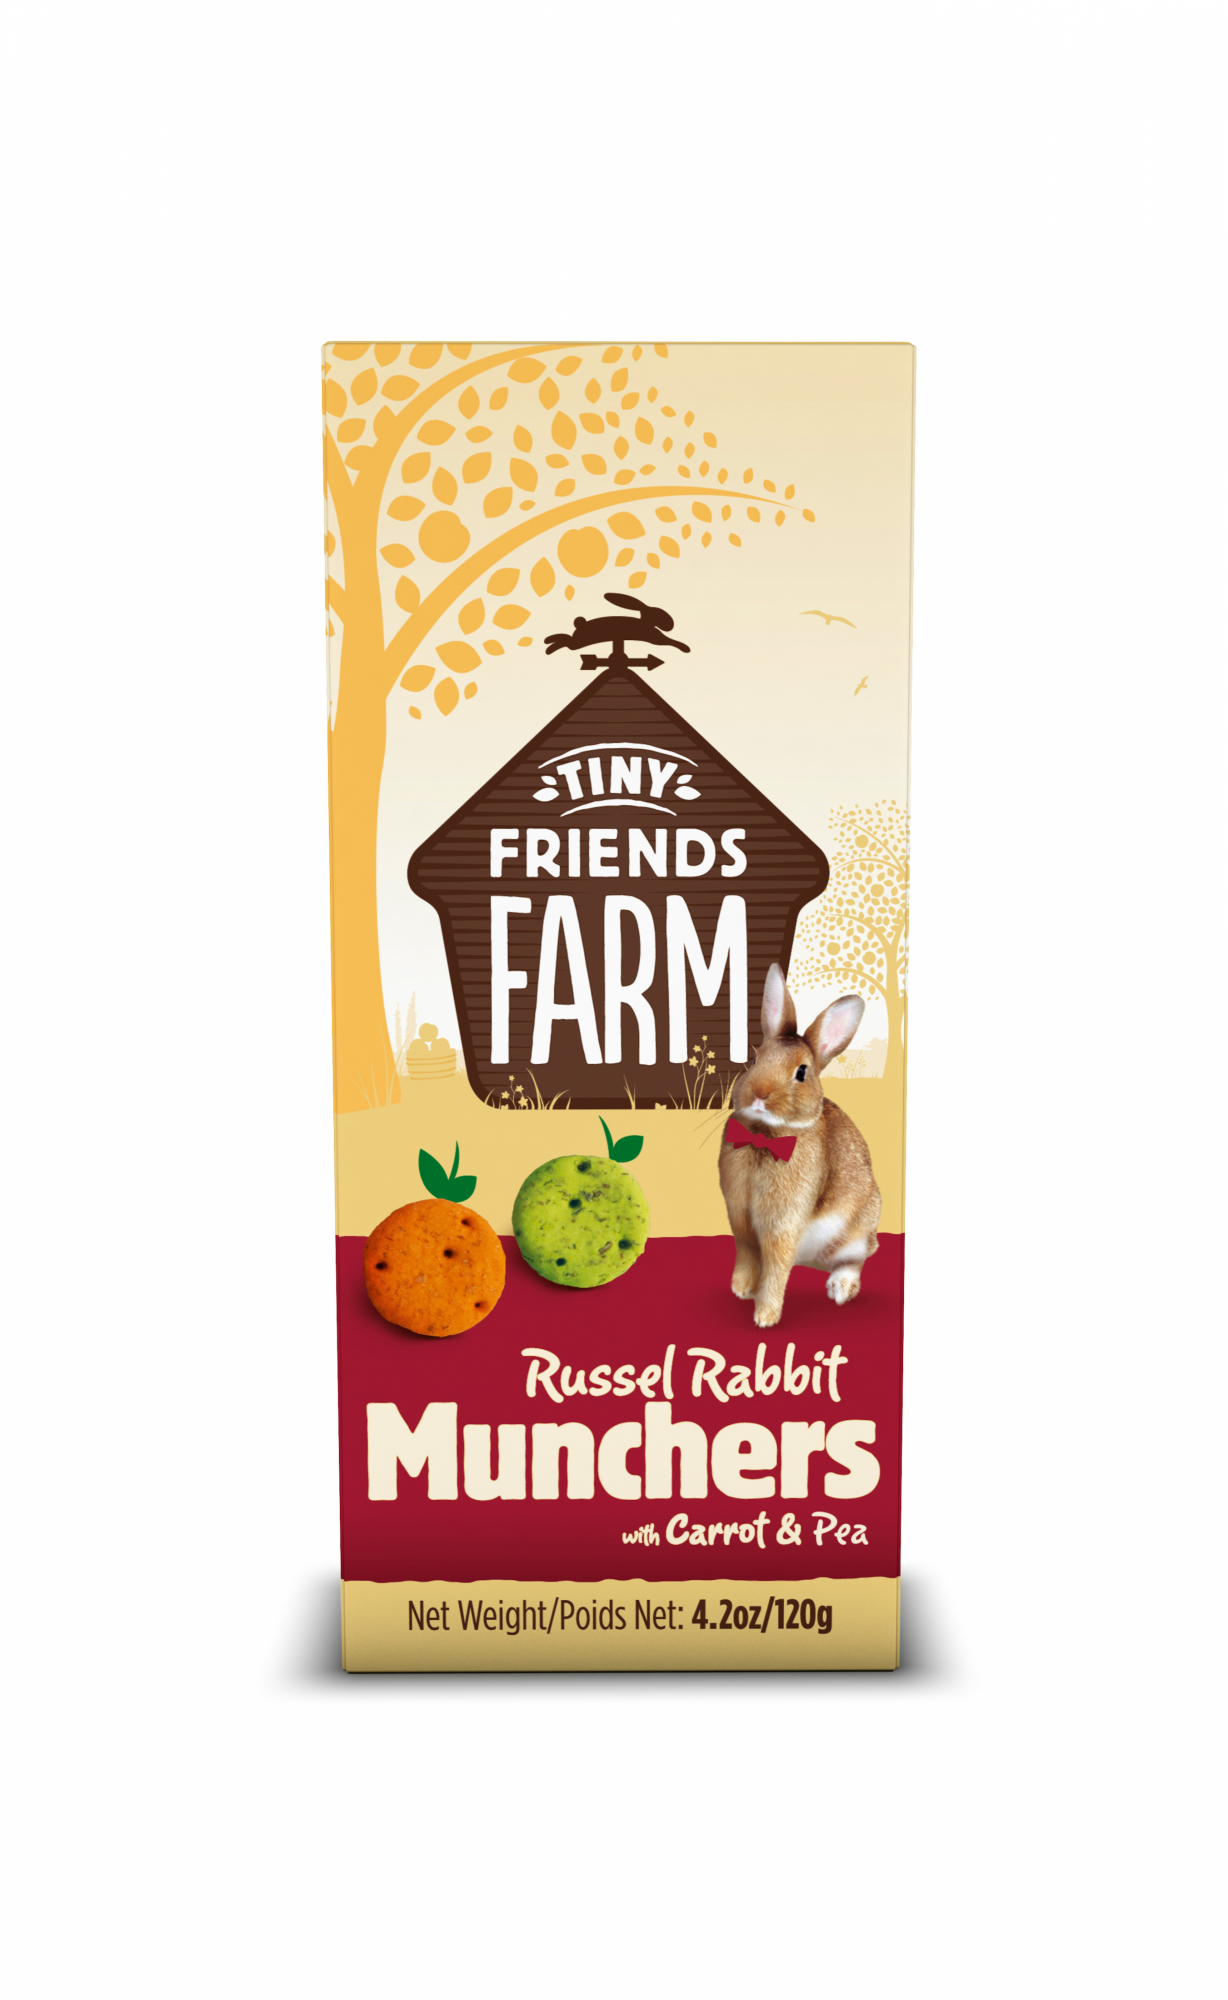 Russel Rabbit Munchers galletas de zahanohia y guisantes